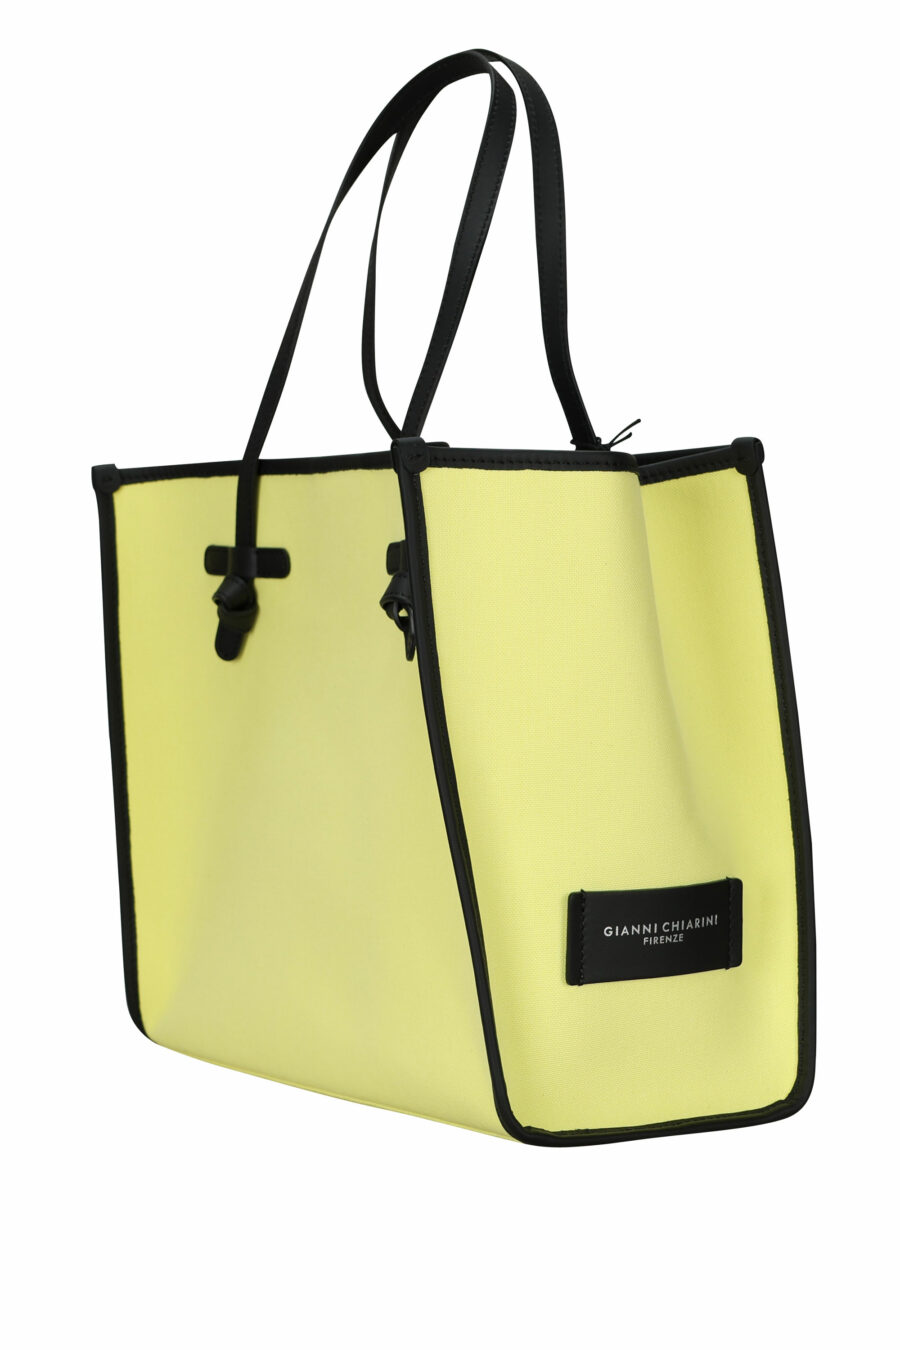 Shopper bag "Marcella" lime green and minilogo - 8057145223520 1